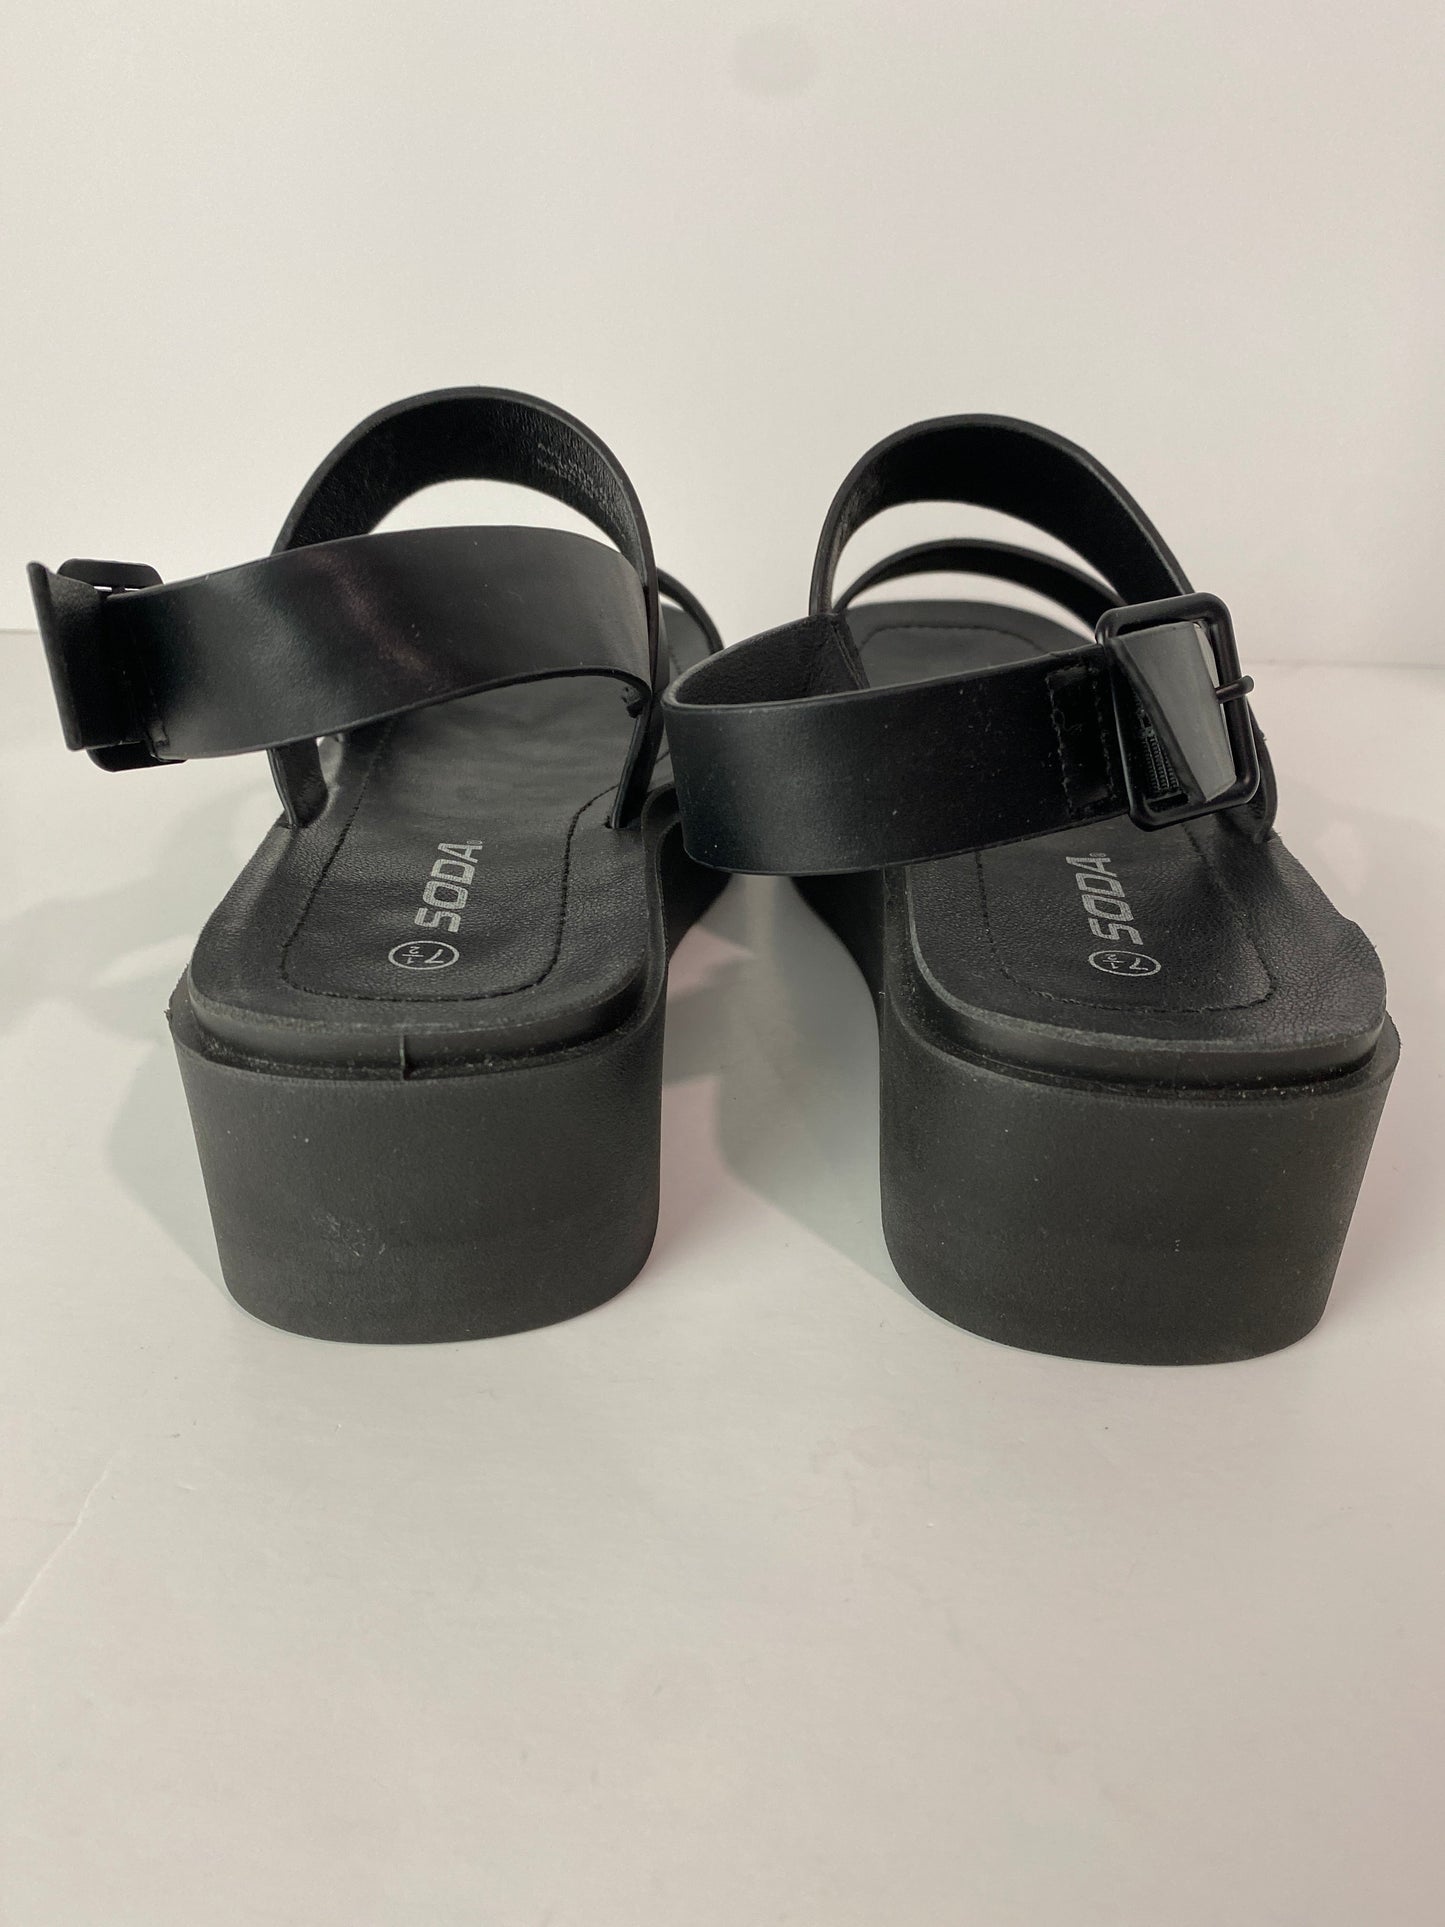 Black Sandals Flats Soda, Size 7.5